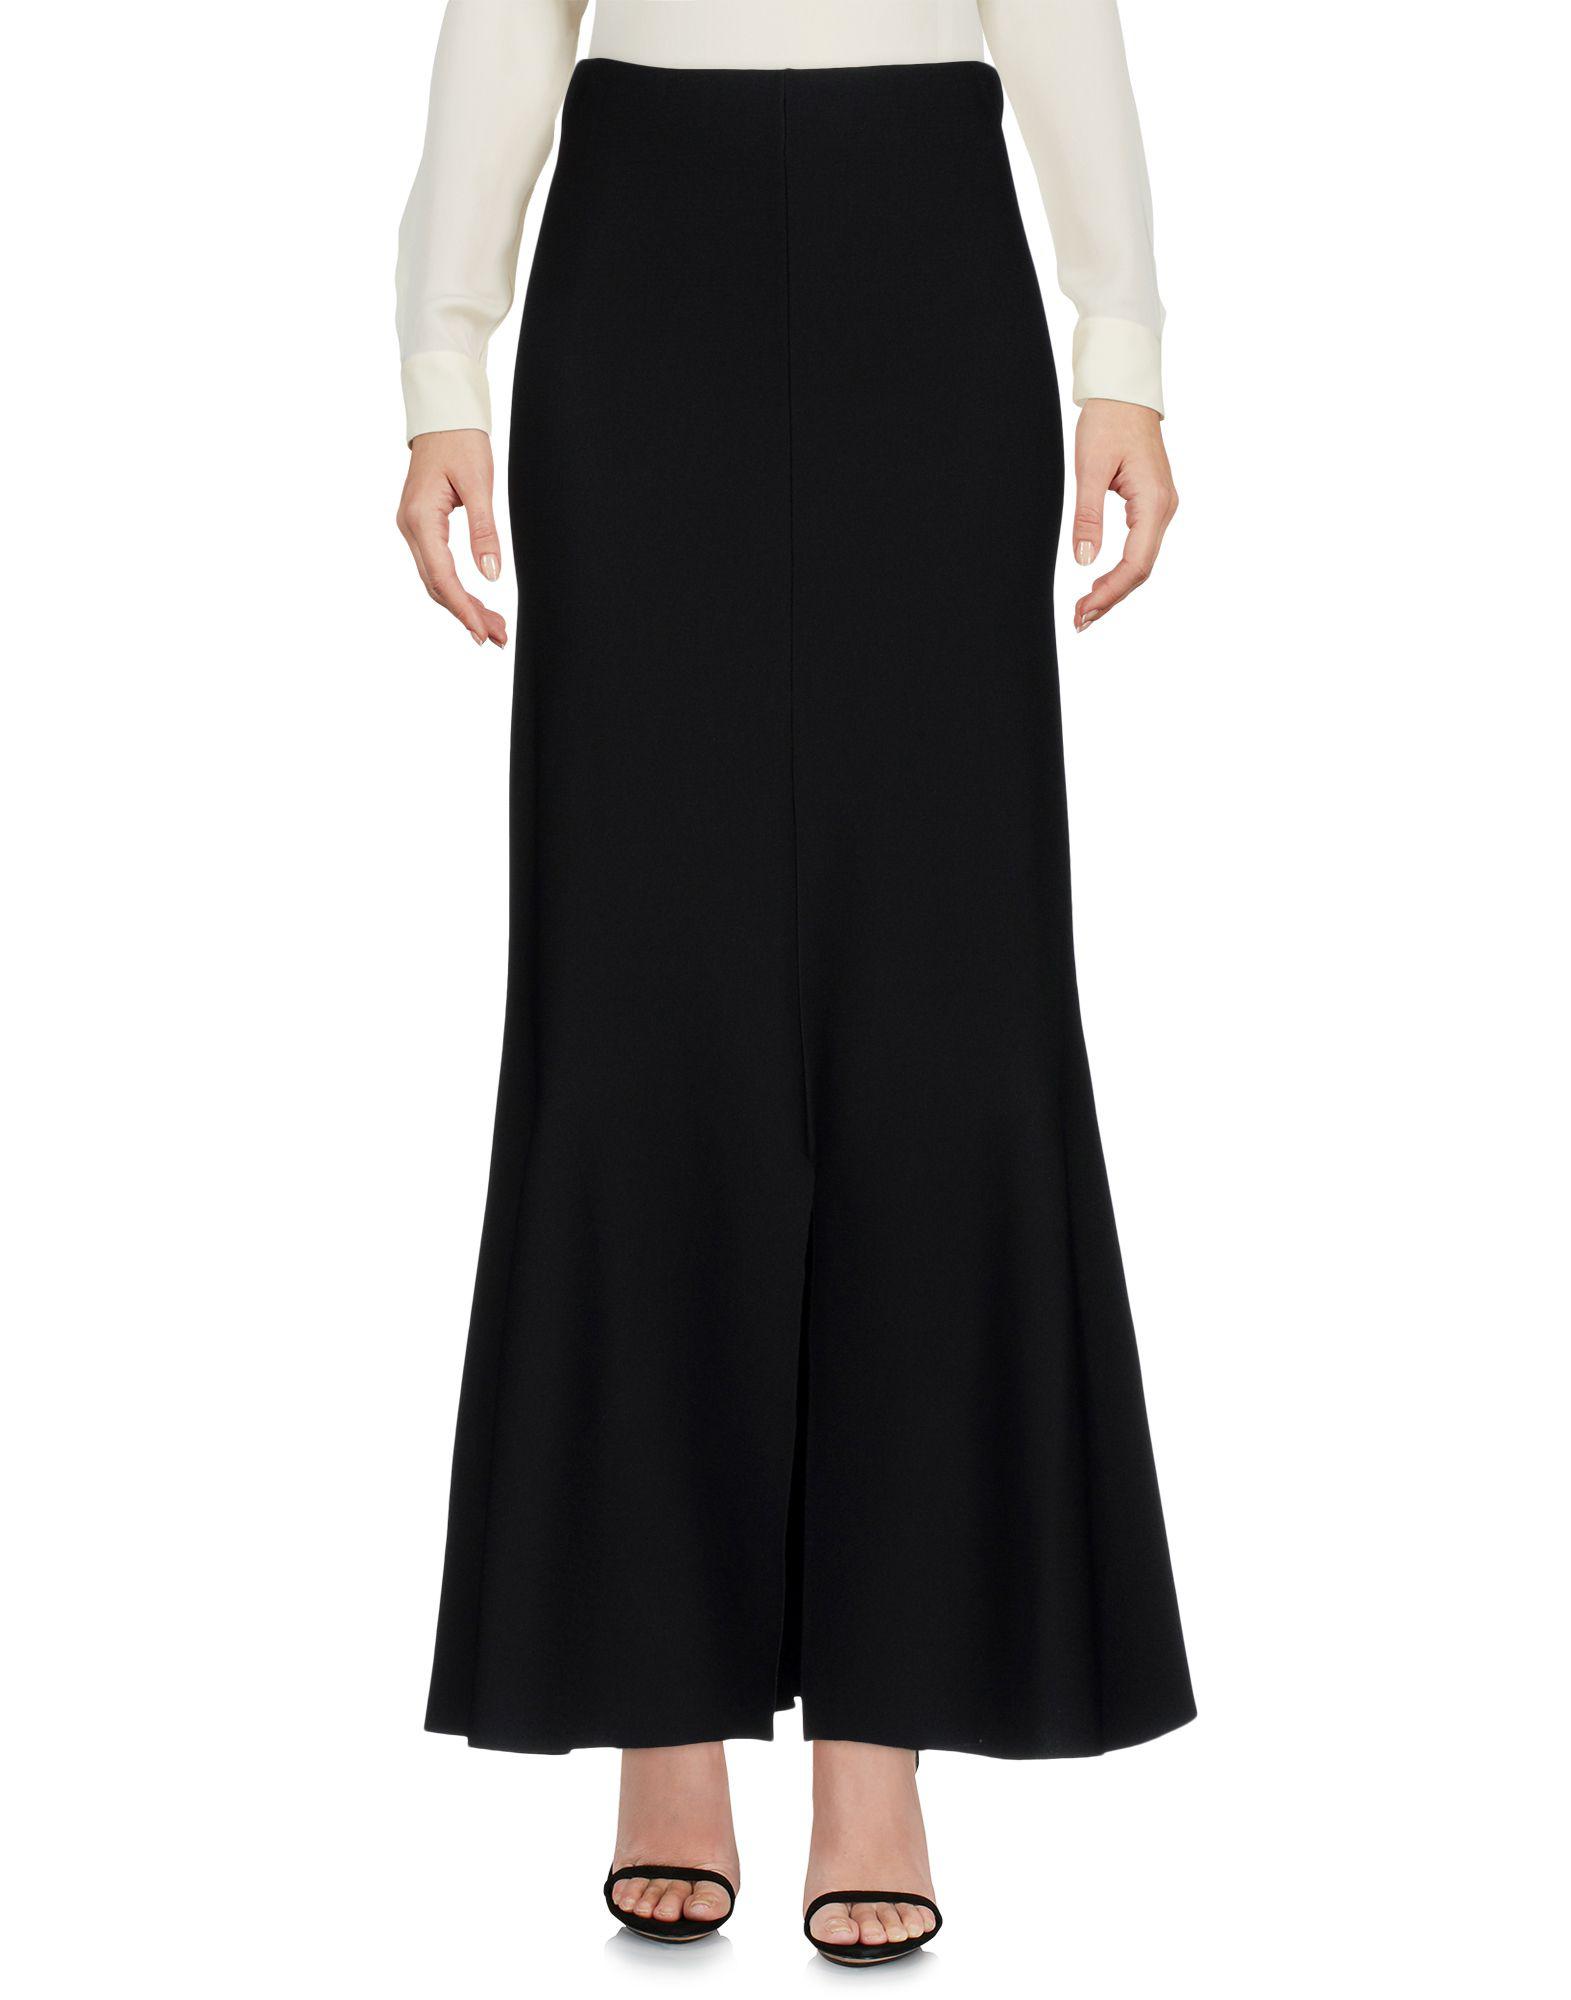 Stella McCartney Long Skirt in Black - Lyst